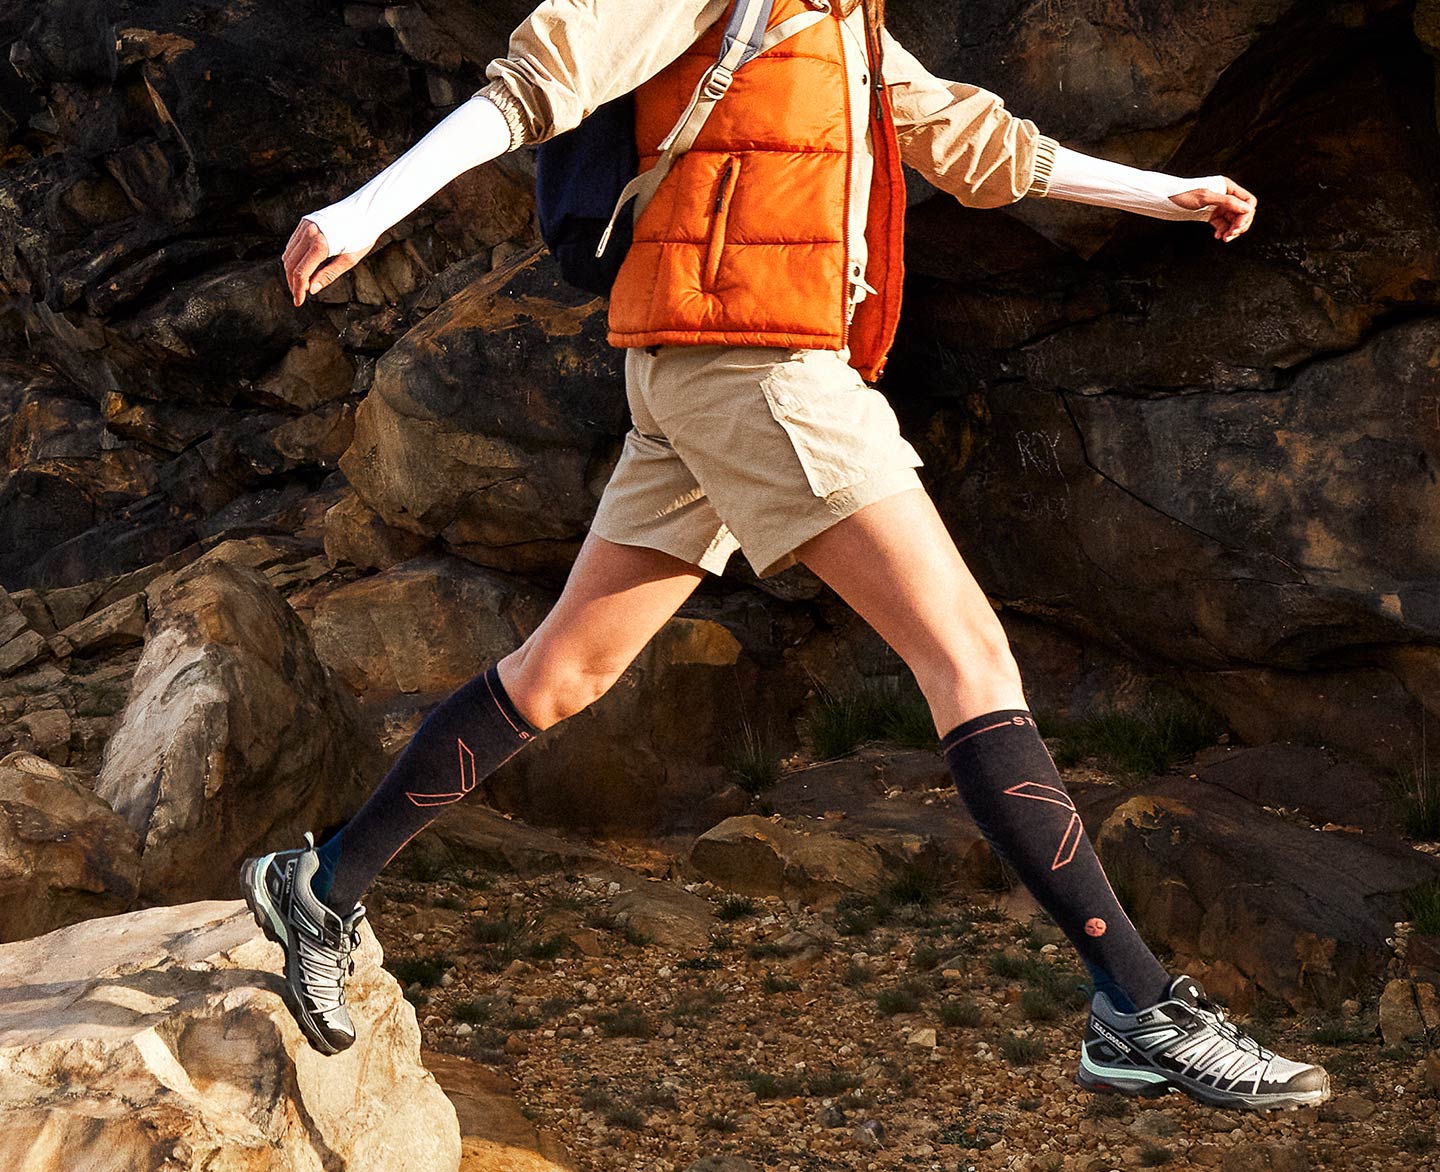 STOX Energy Socks - Hiking Socks for Men - Premium Compression Socks - Fast  Recovery - Les